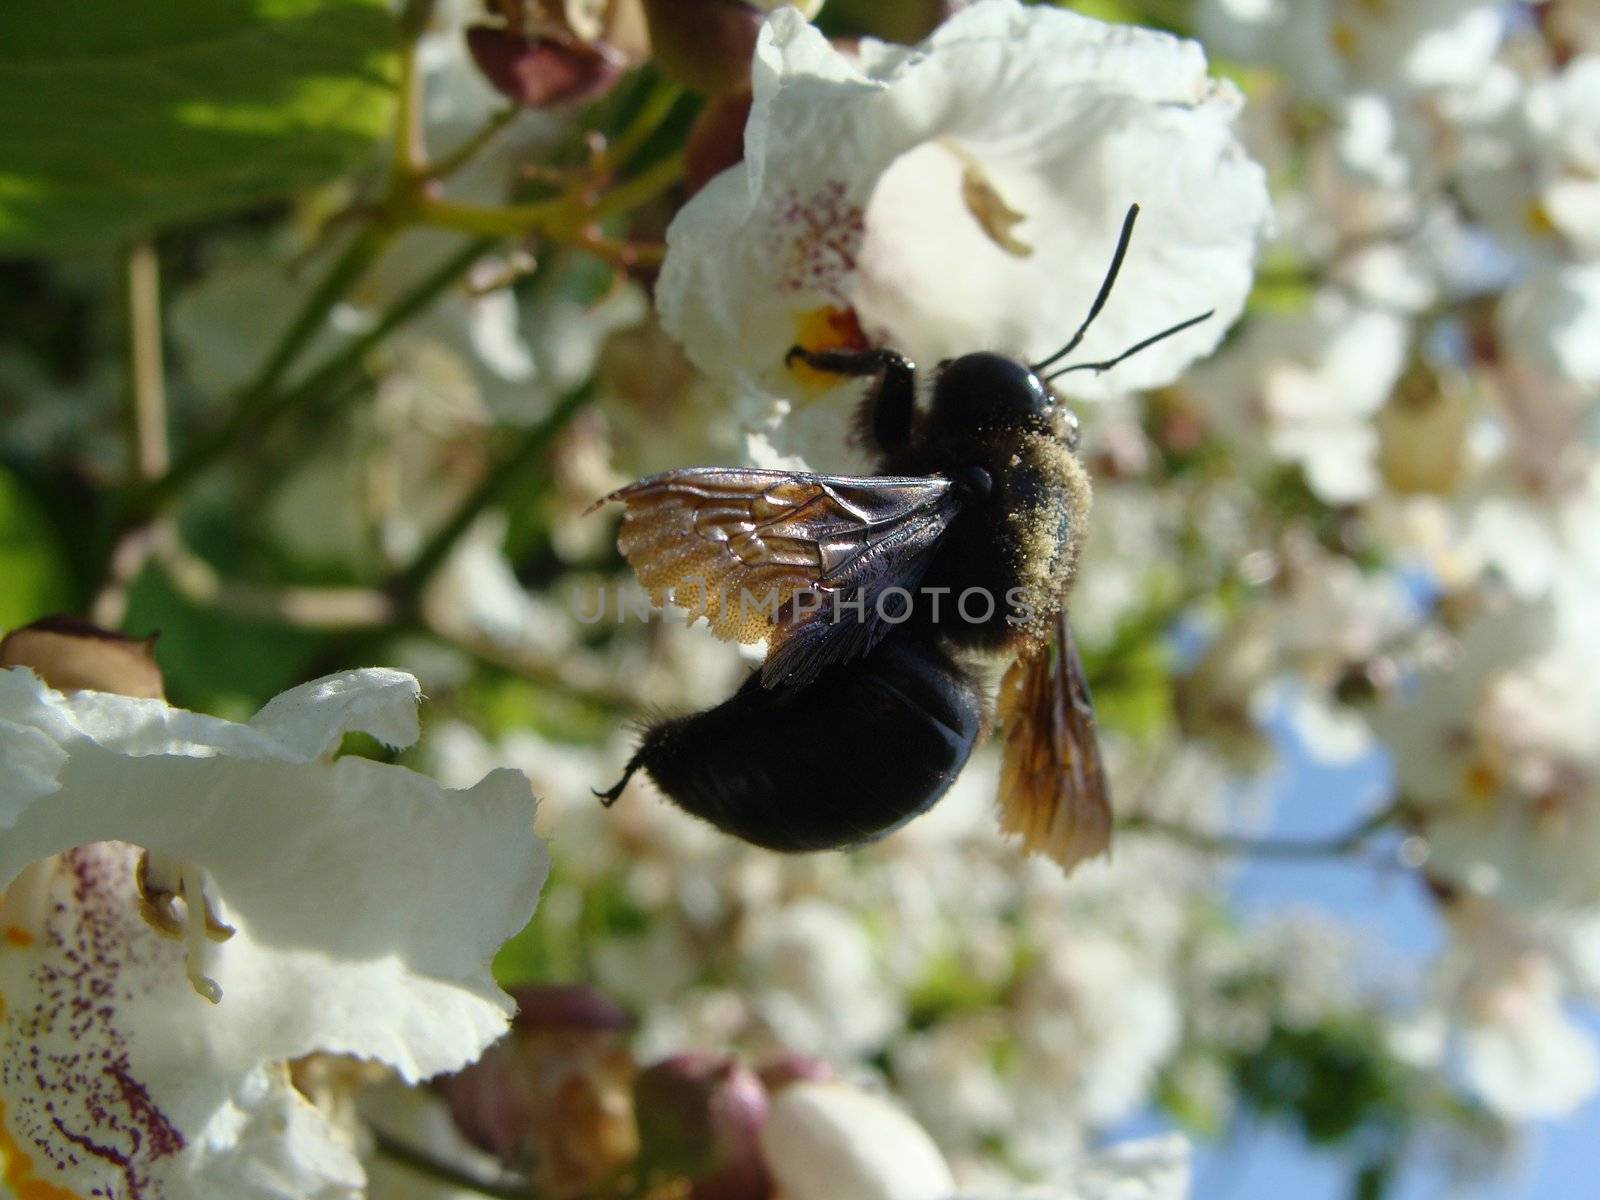 Big bumblebee on white flower by Larisa13